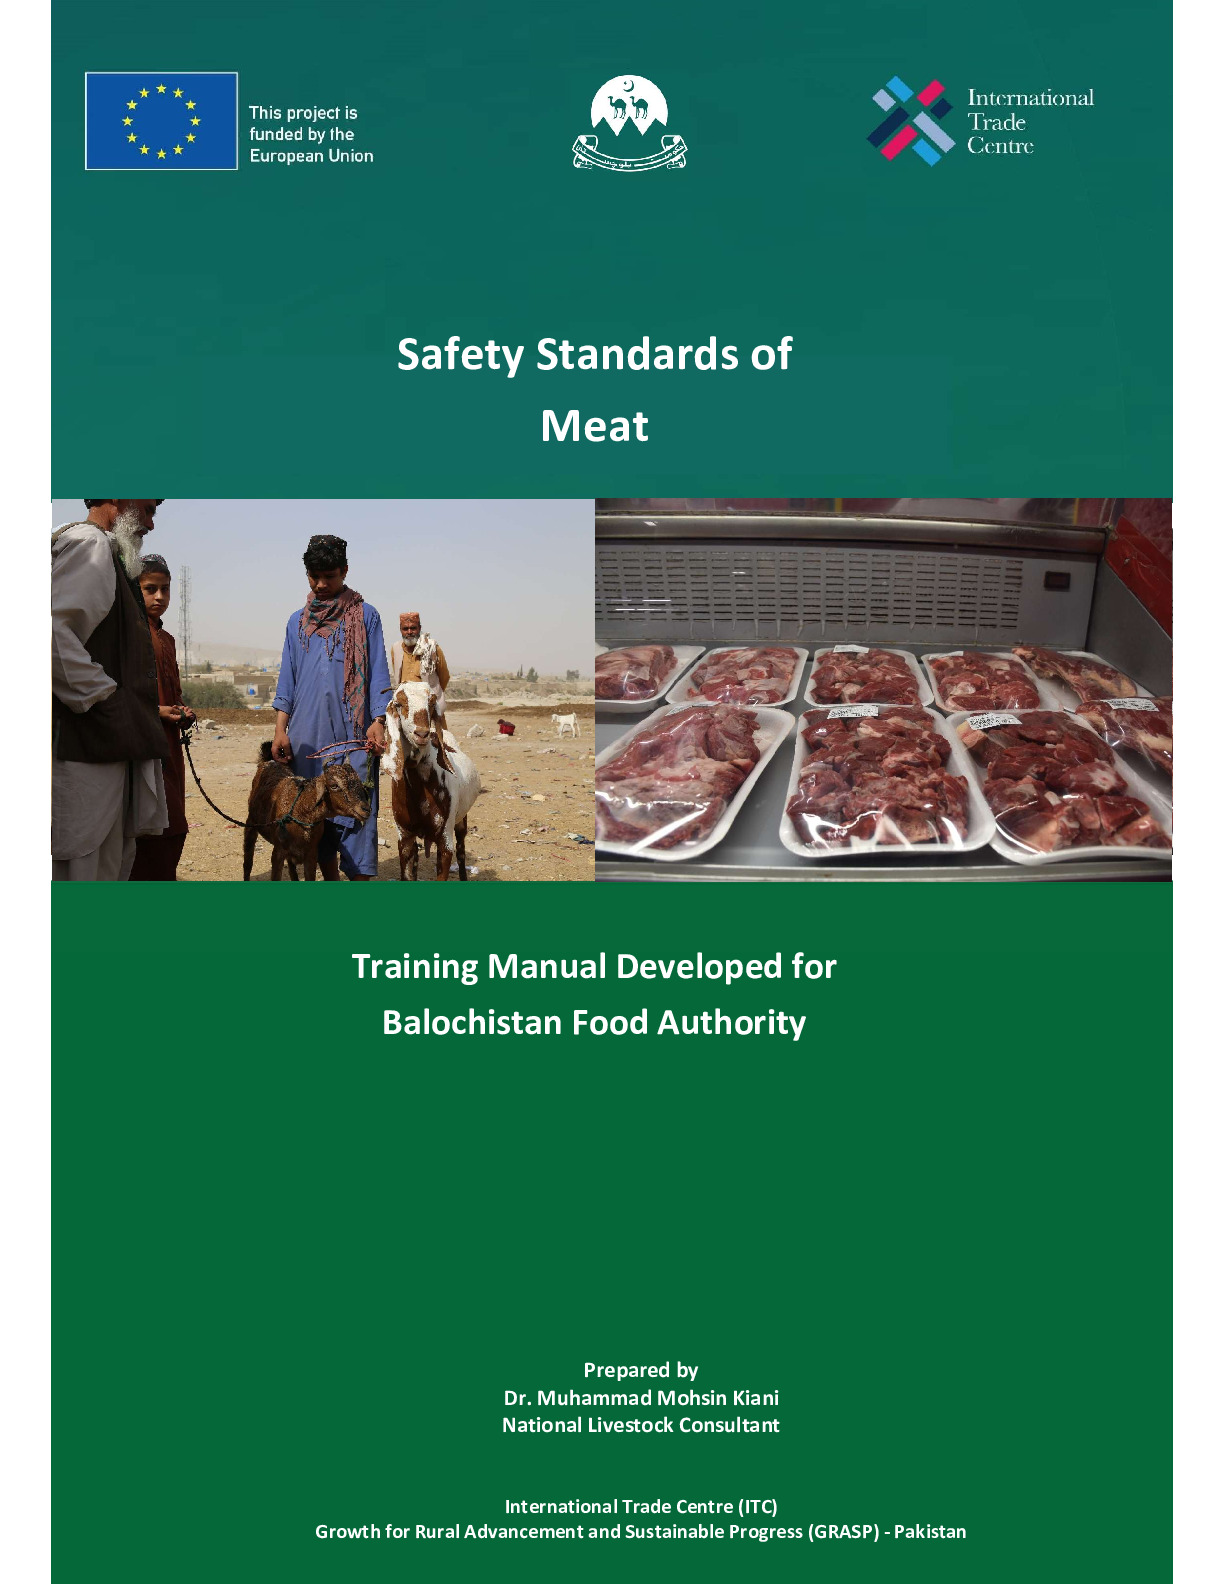 grasp-14-safety_standards_of_meat_balochistan_1